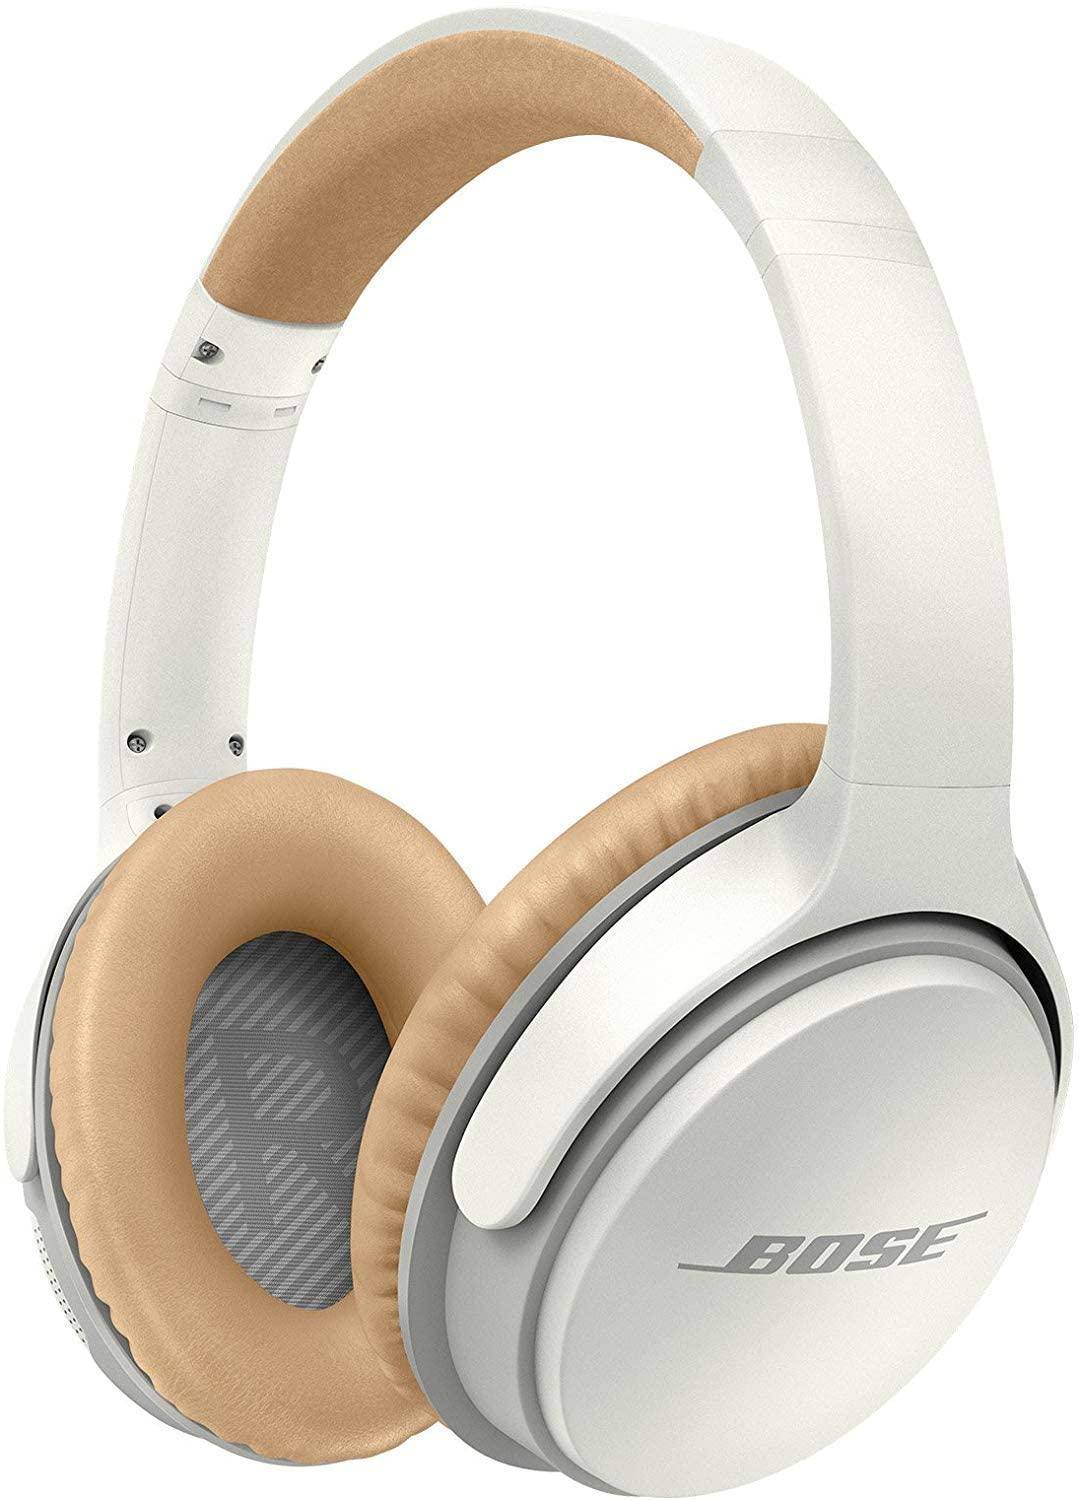 Bose SoundLink® Around-Ear Wireless Headphones II With Mic zoom image